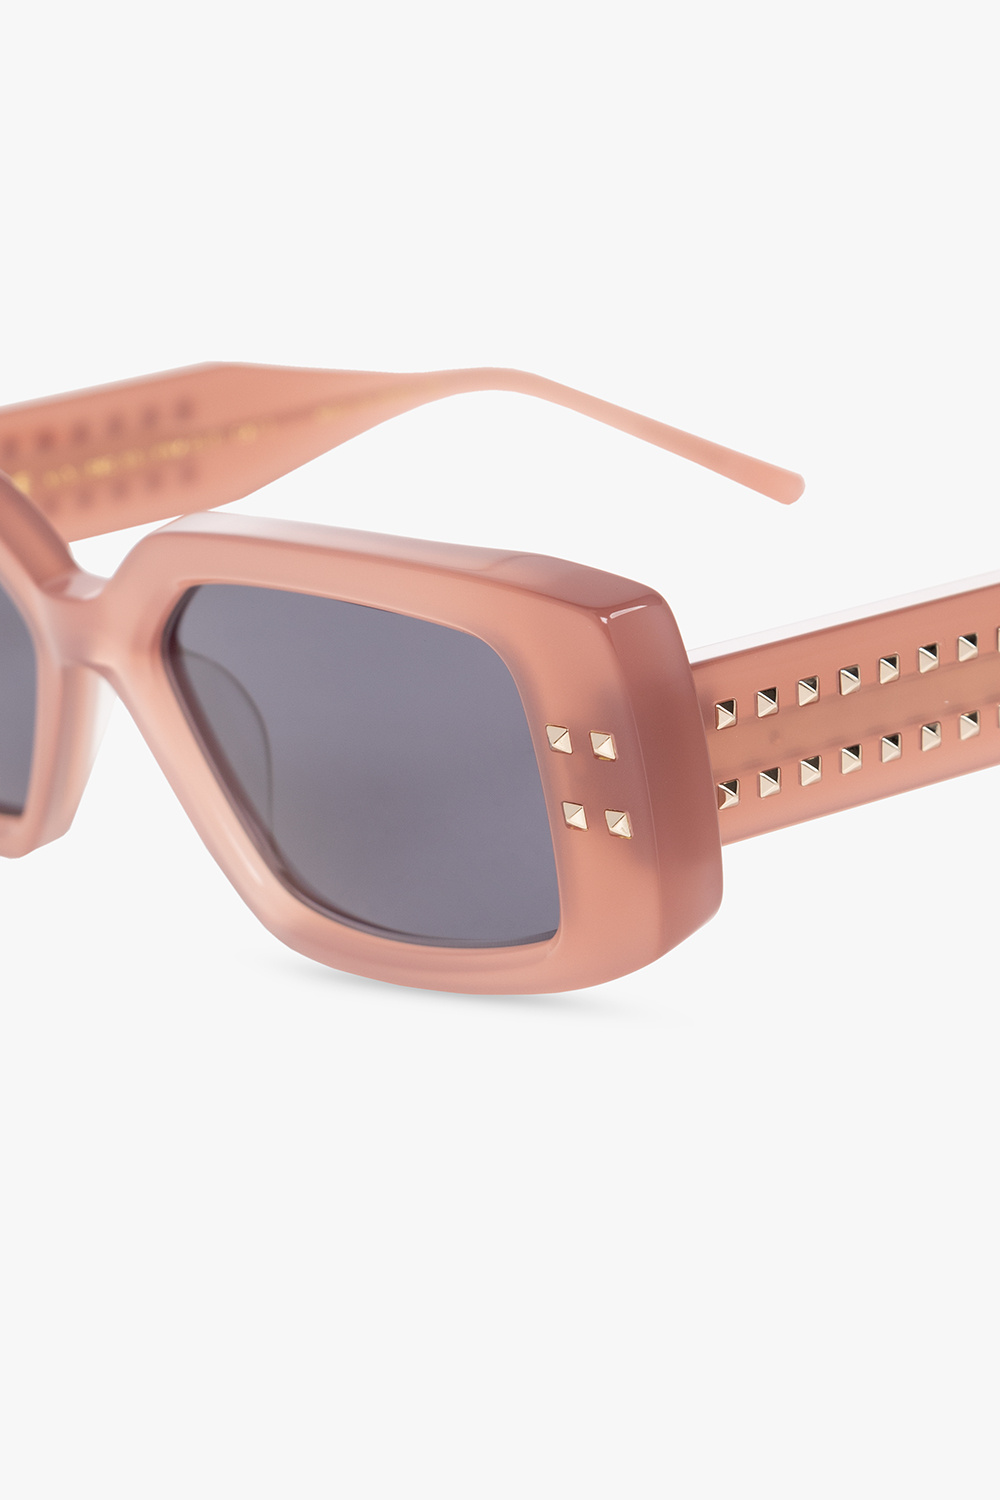 Valentino Eyewear two-tone link-style sunglasses chain